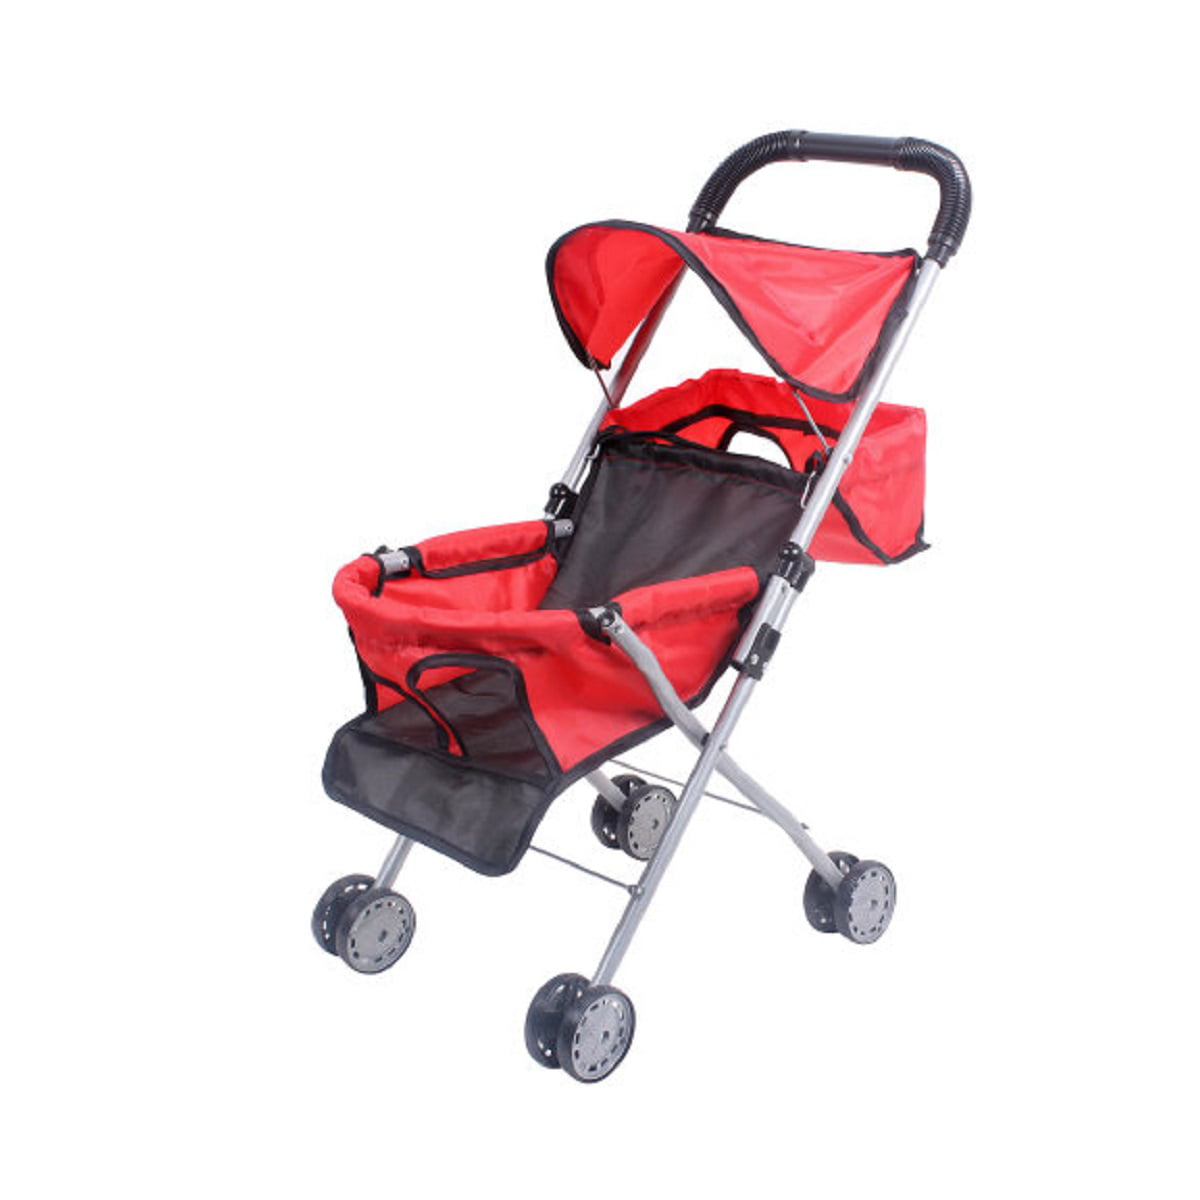 Details about   Playmobil Stroller Orange Stroller w/ Topper Child Baby Dollhouse Miniature E33 